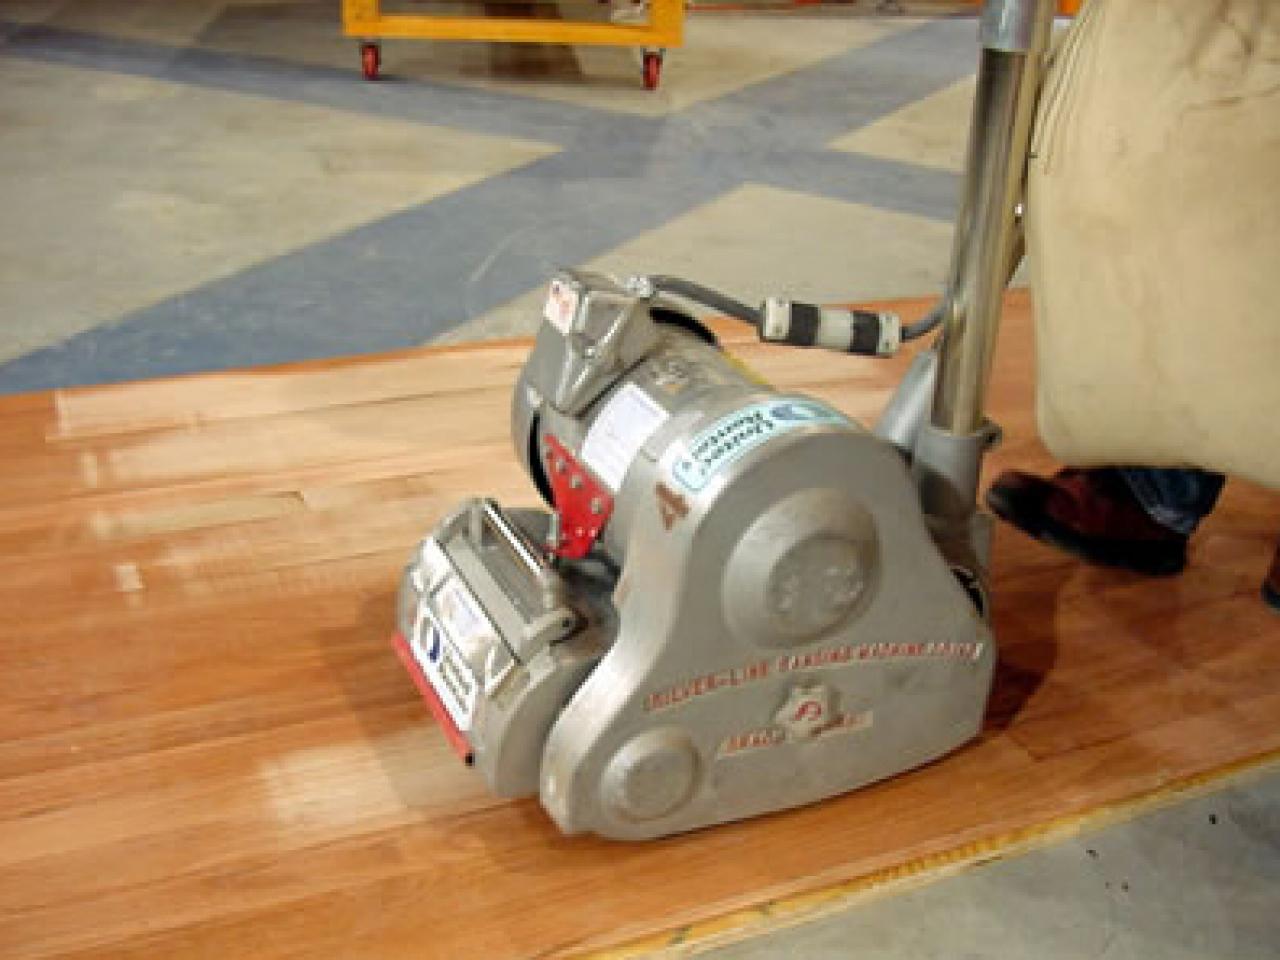 Drill Brushes And Floor Sander How To, Hardwood Floor Sanding Equipment